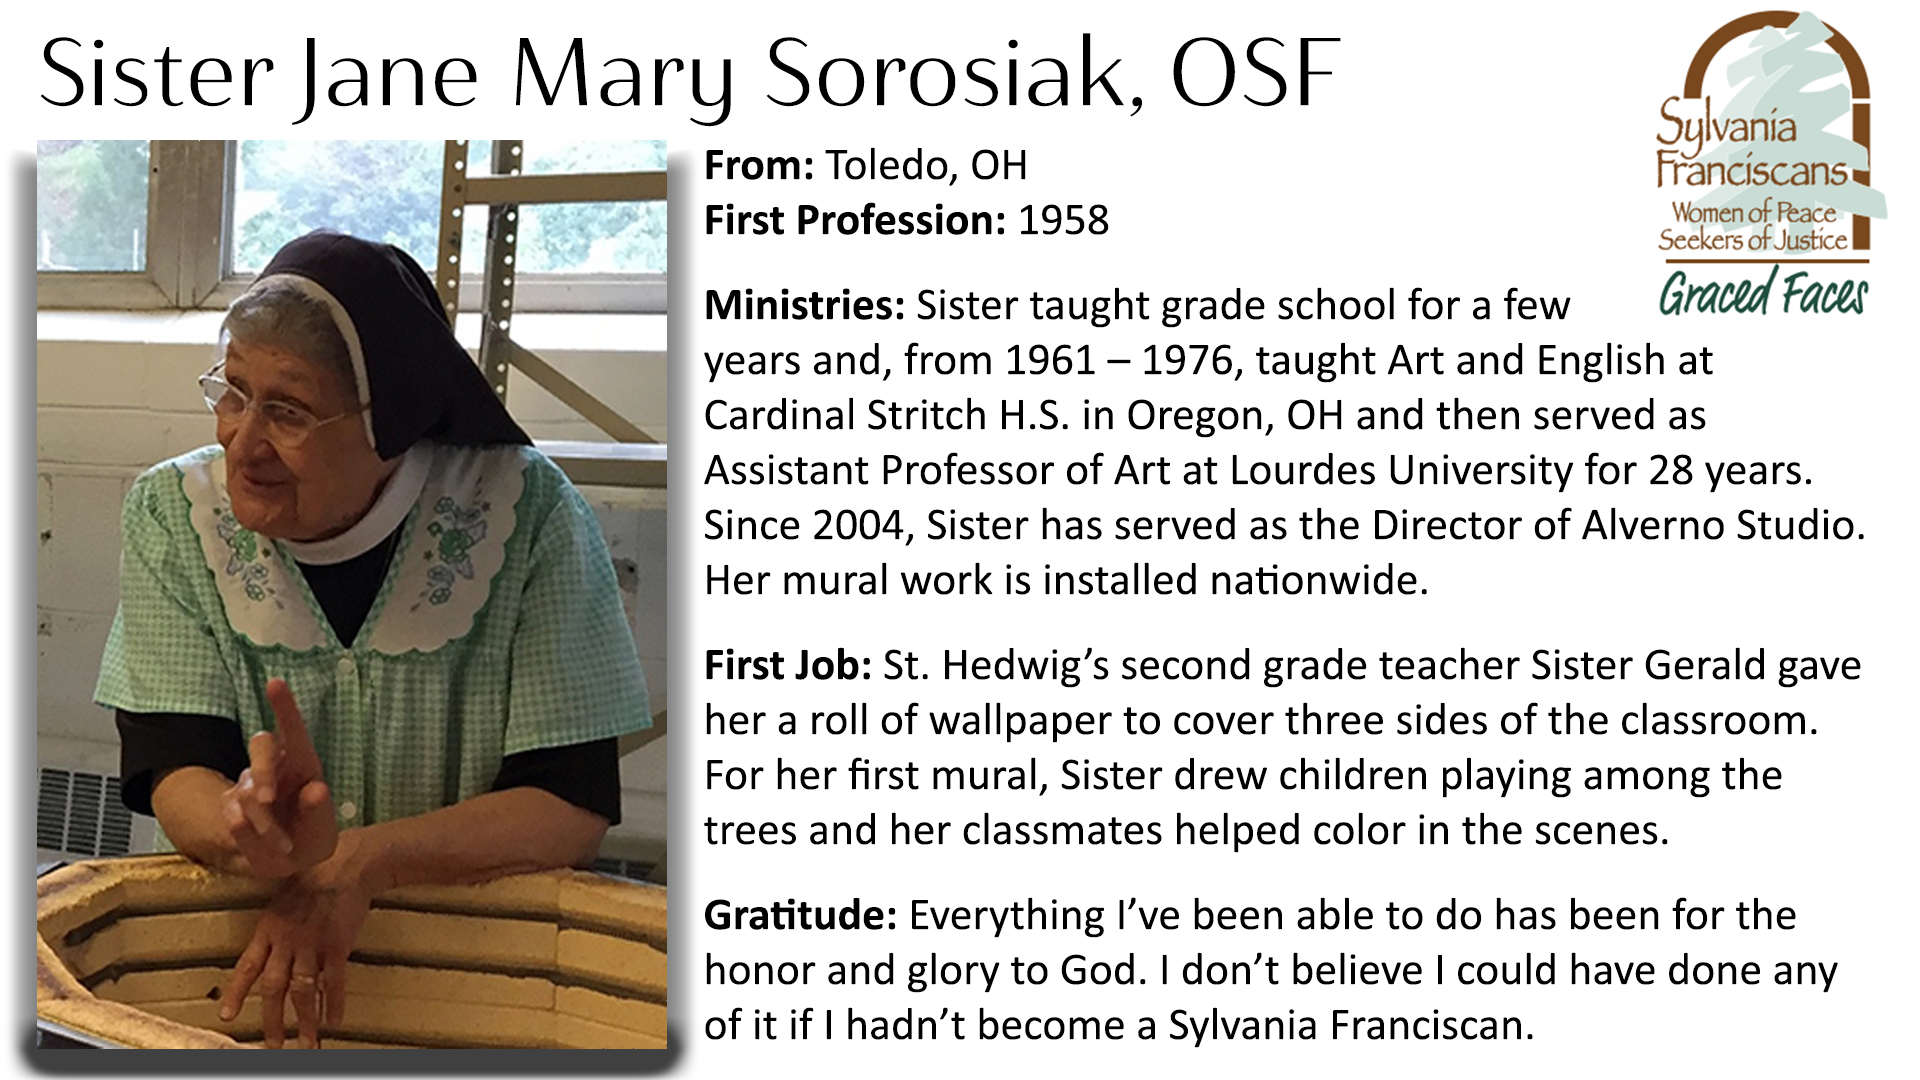 Sister Jane Mary Sorosiak, OSF